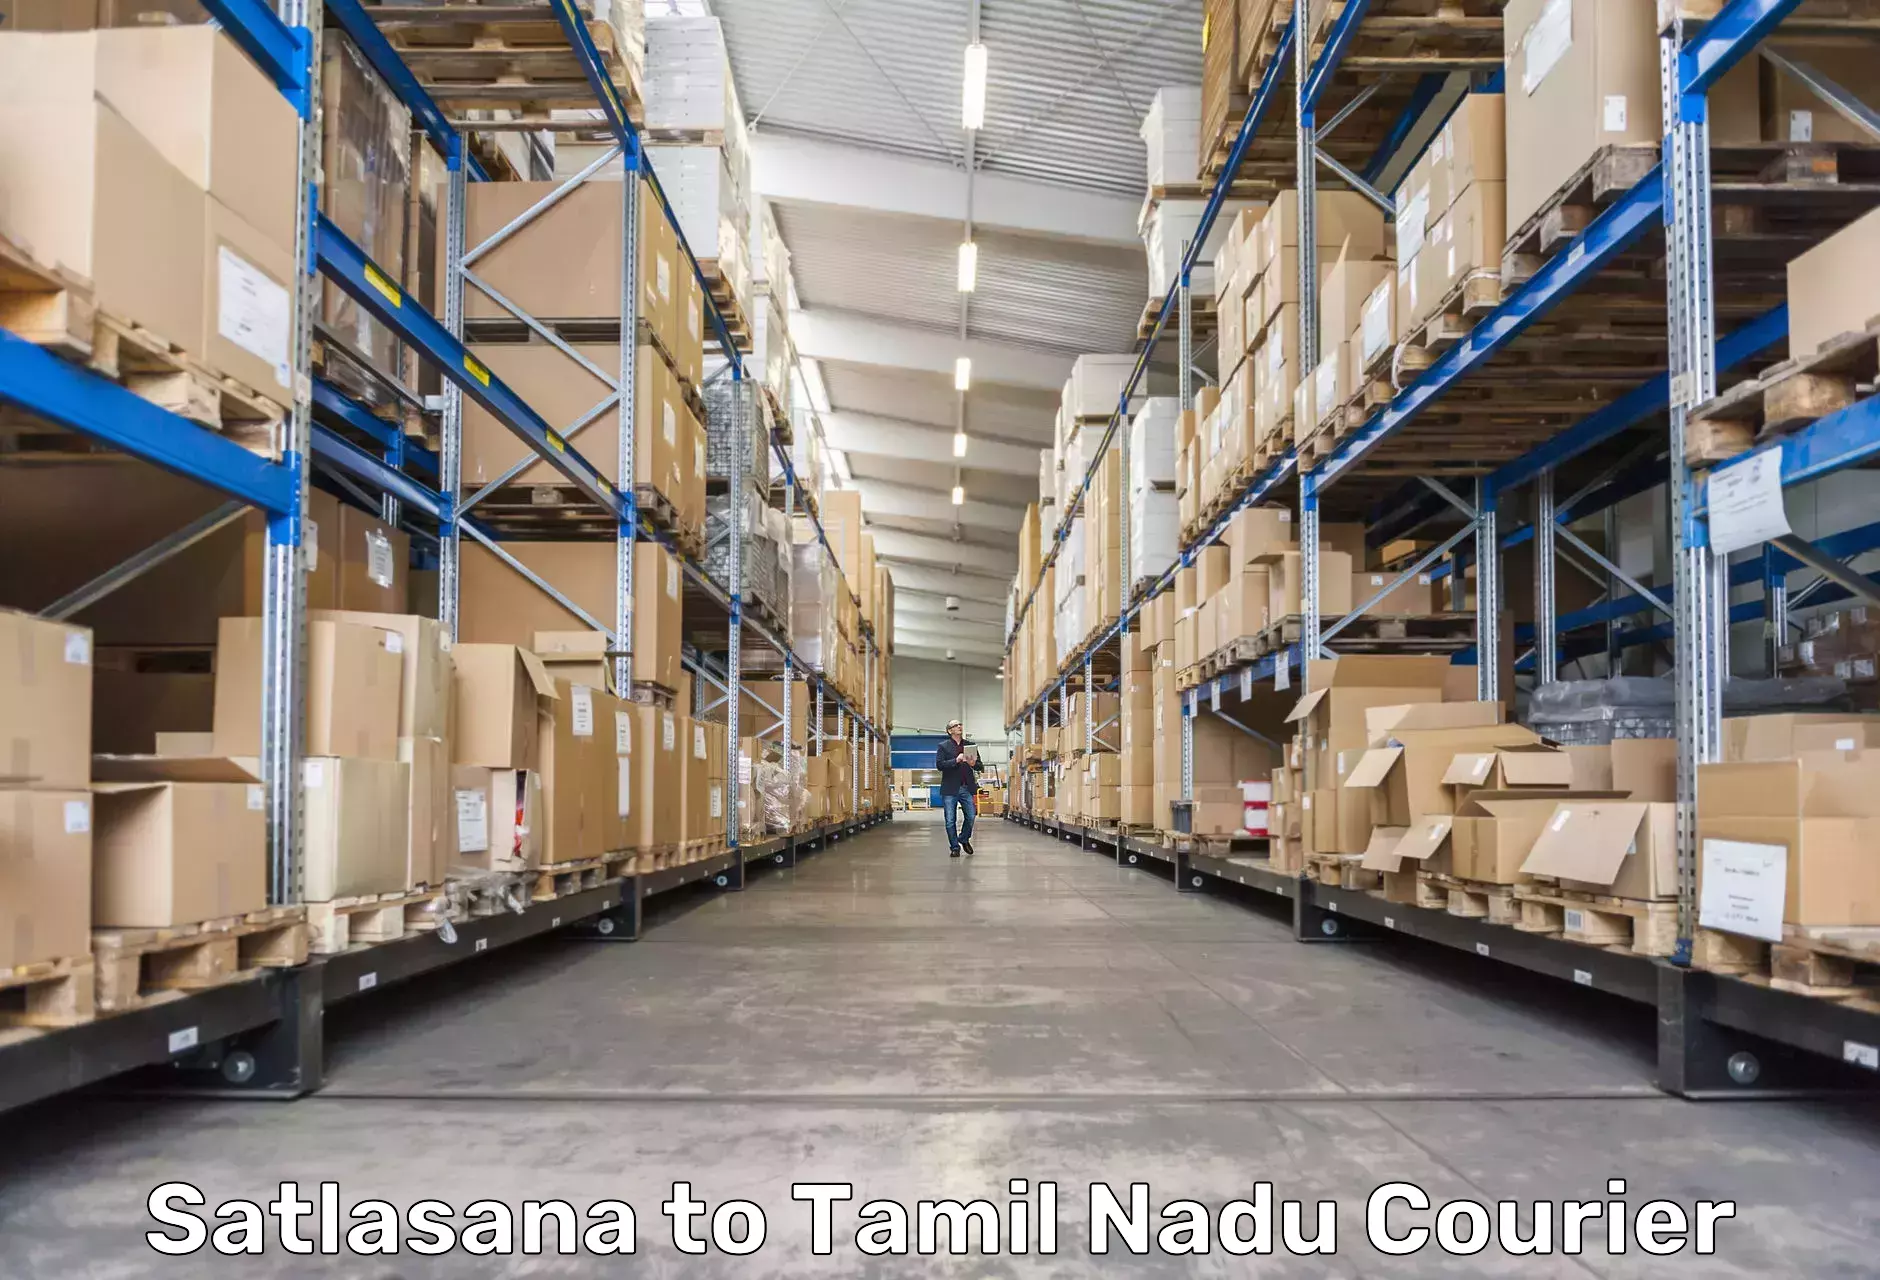 Courier service comparison Satlasana to Tamil Nadu